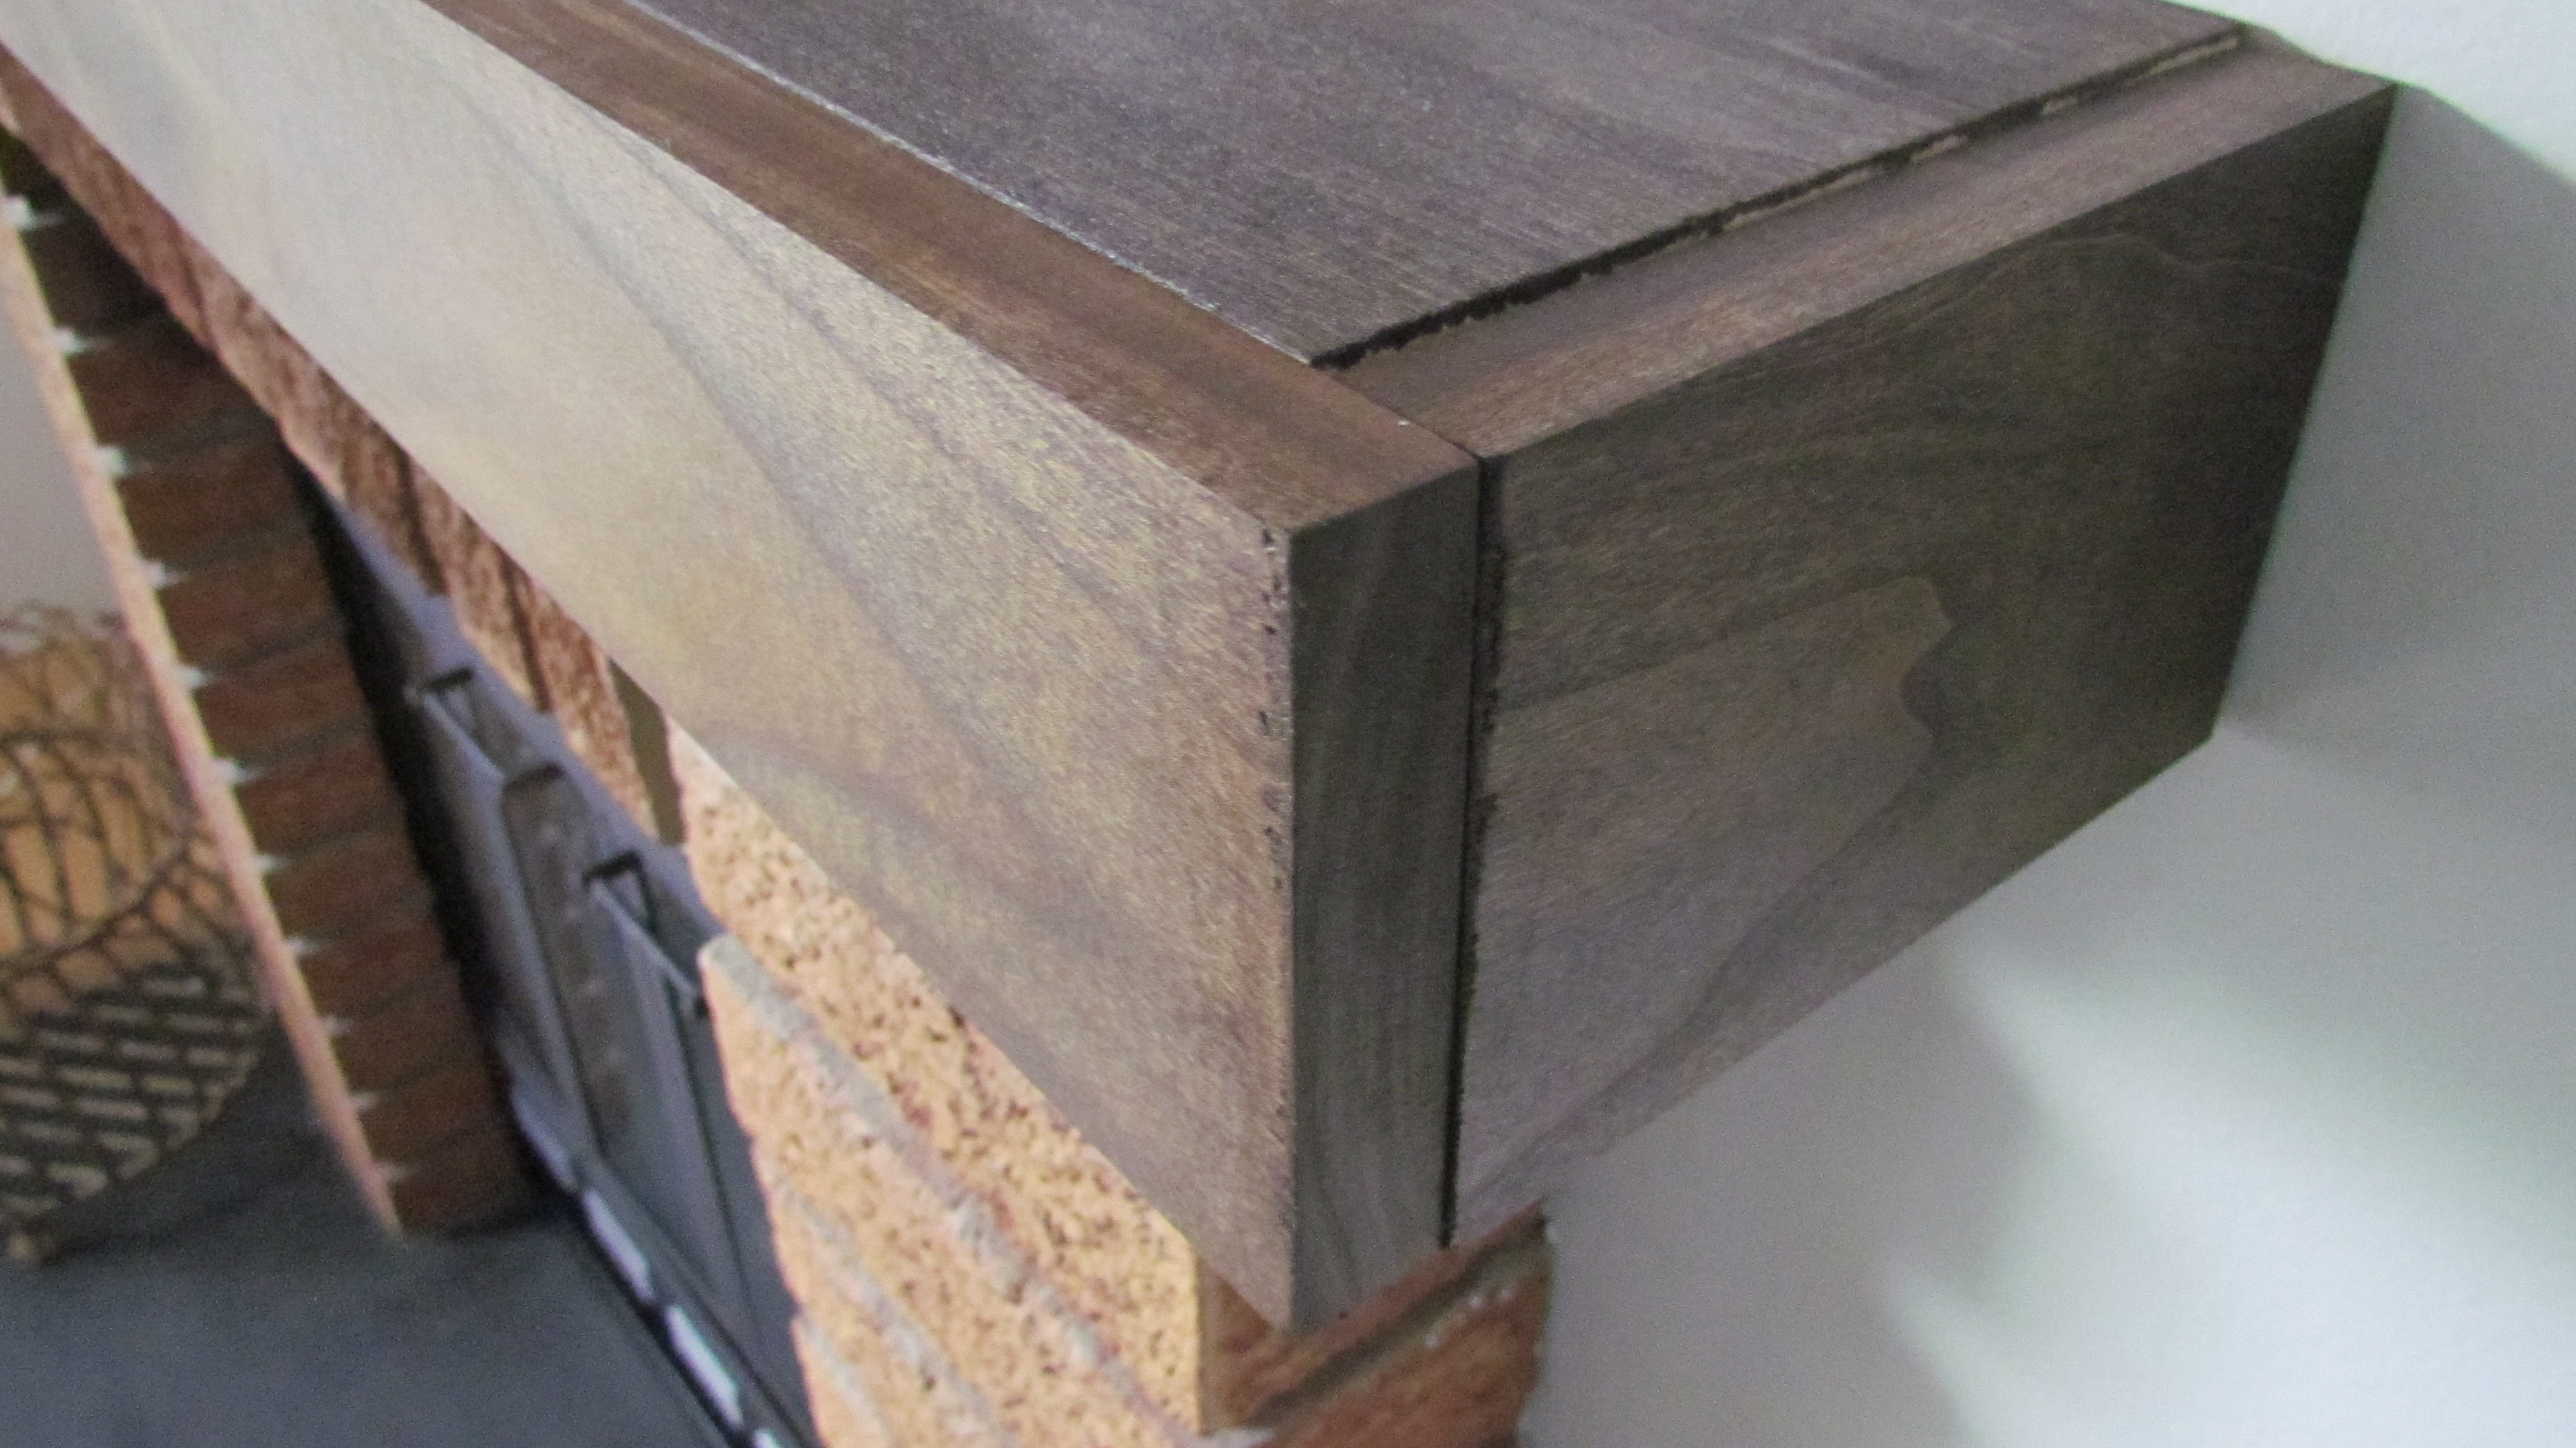 Best ideas about DIY Fireplace Mantel Shelf
. Save or Pin 54 Diy Wood Mantel Shelf Modern Floating Mantel Shelf Now.